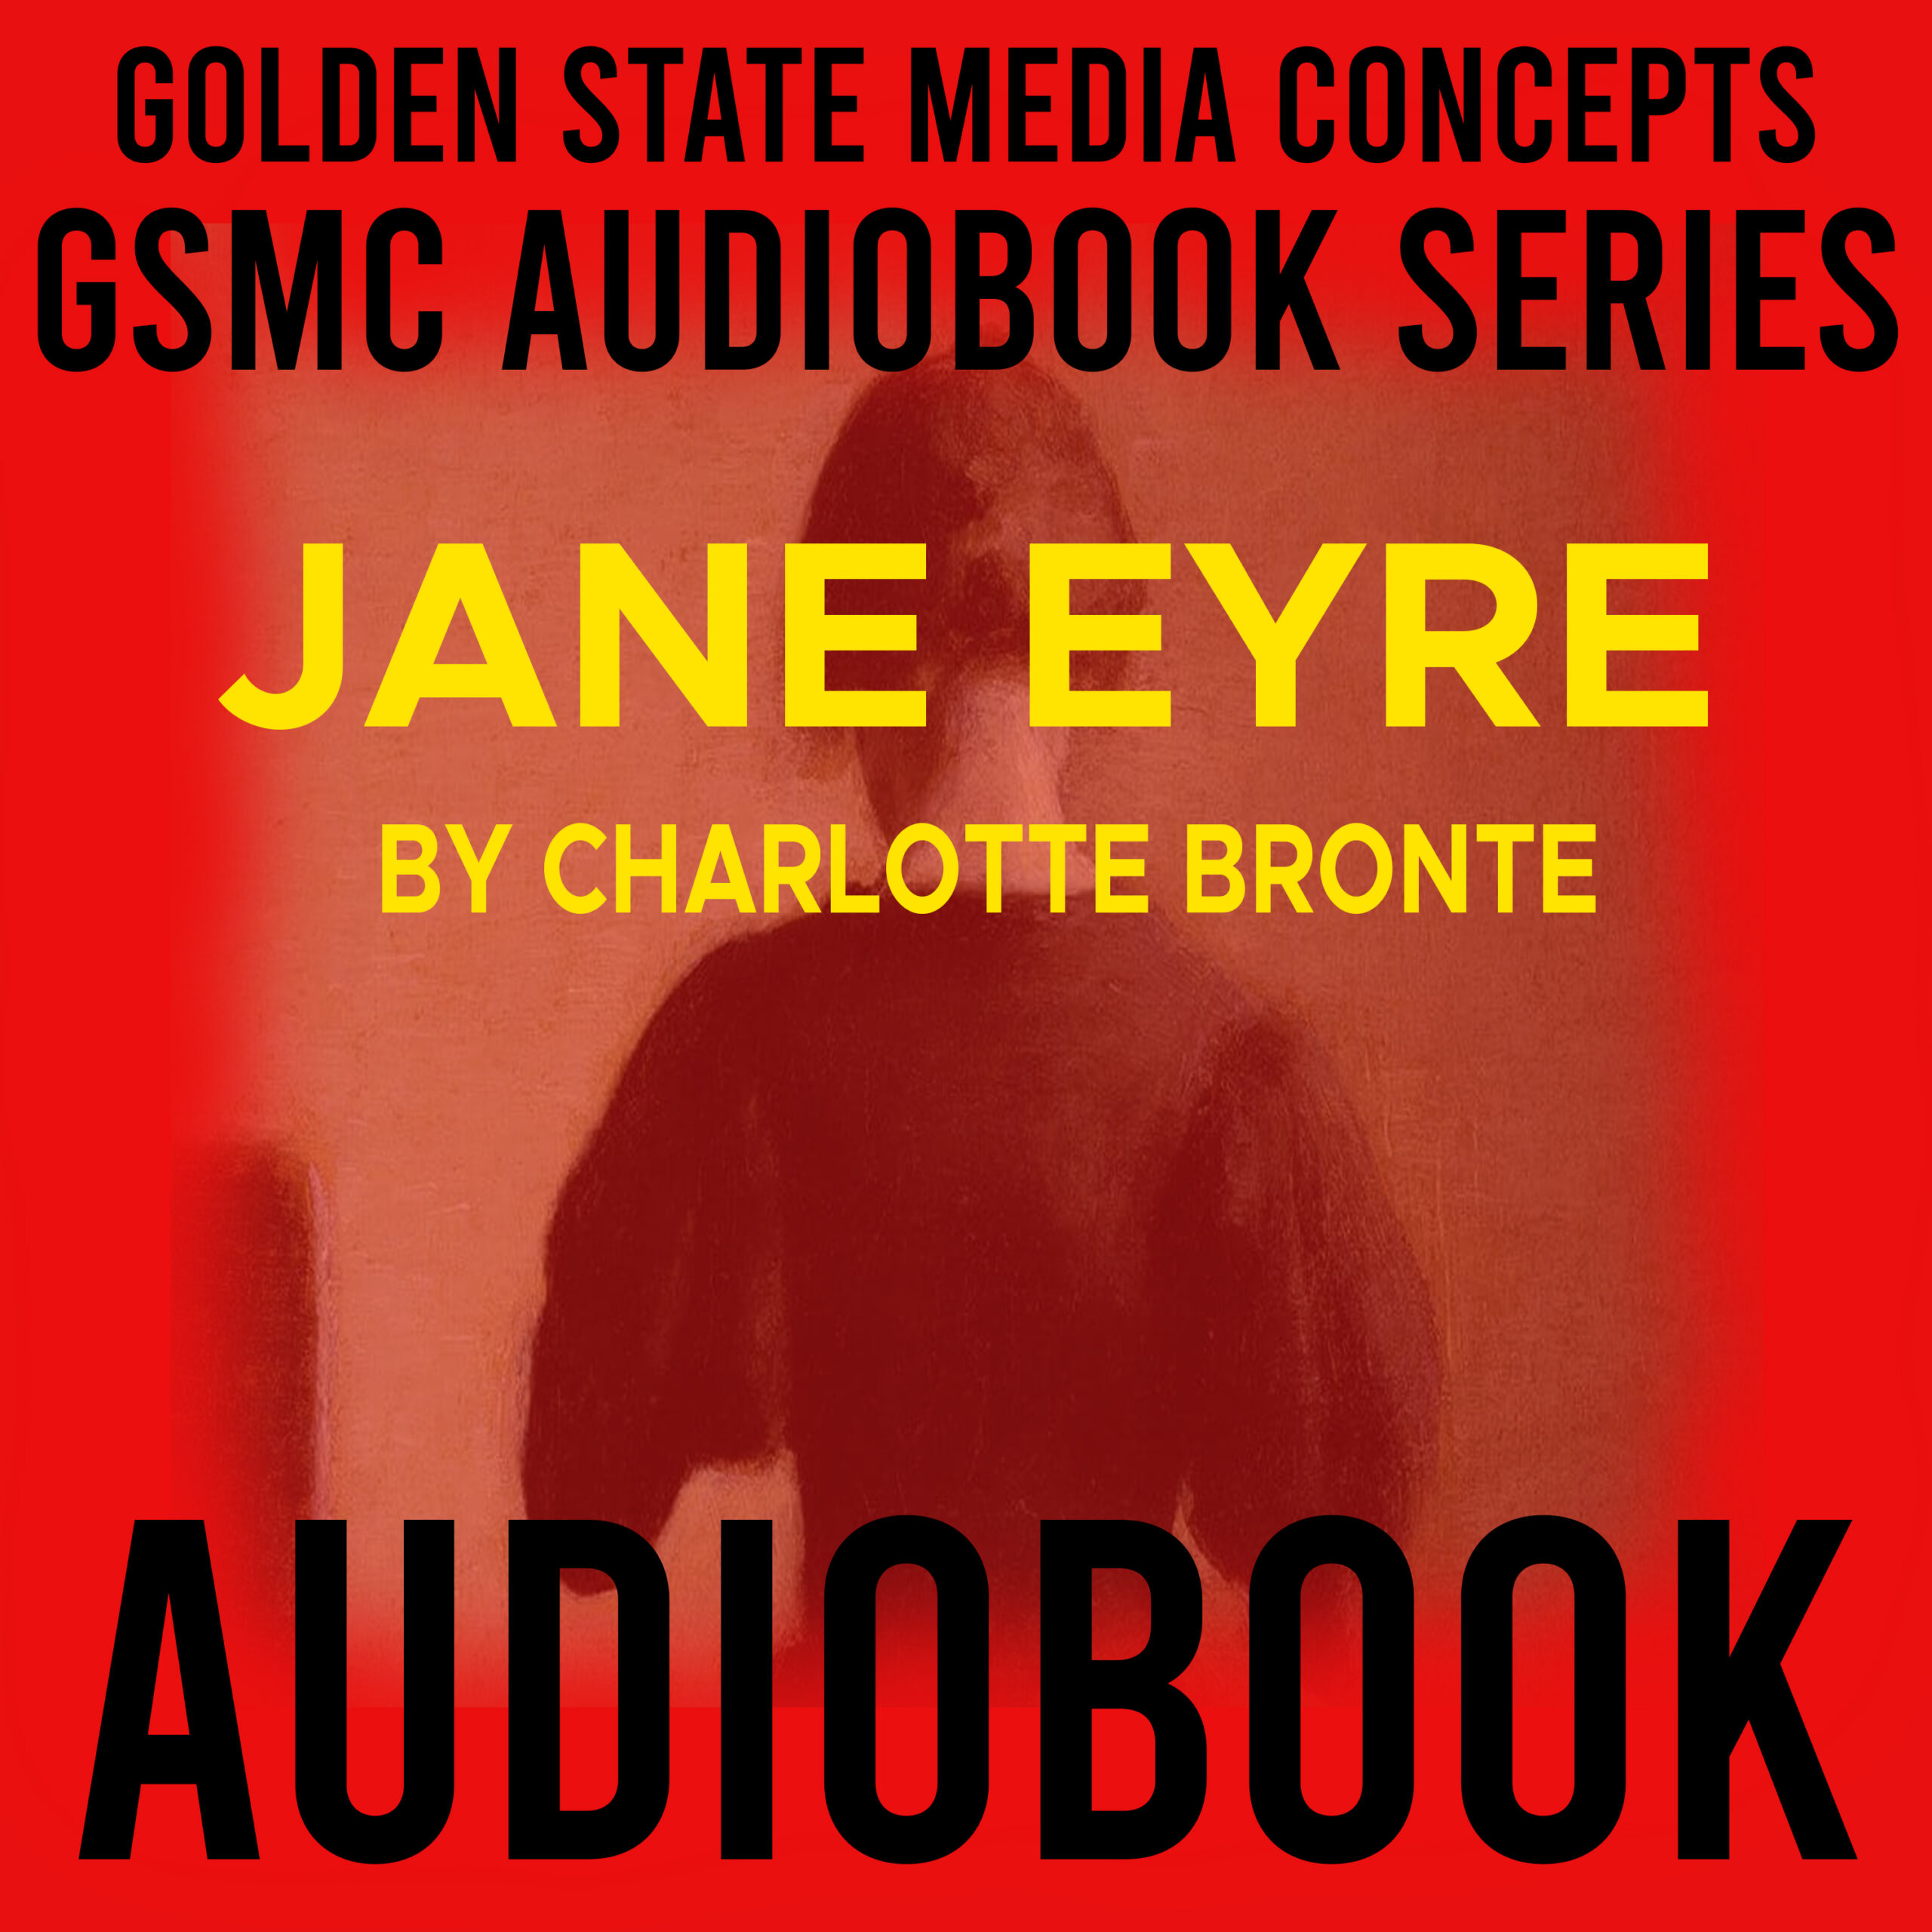 GSMC Audiobook Series: Jane Eyre by Charlotte Bronte